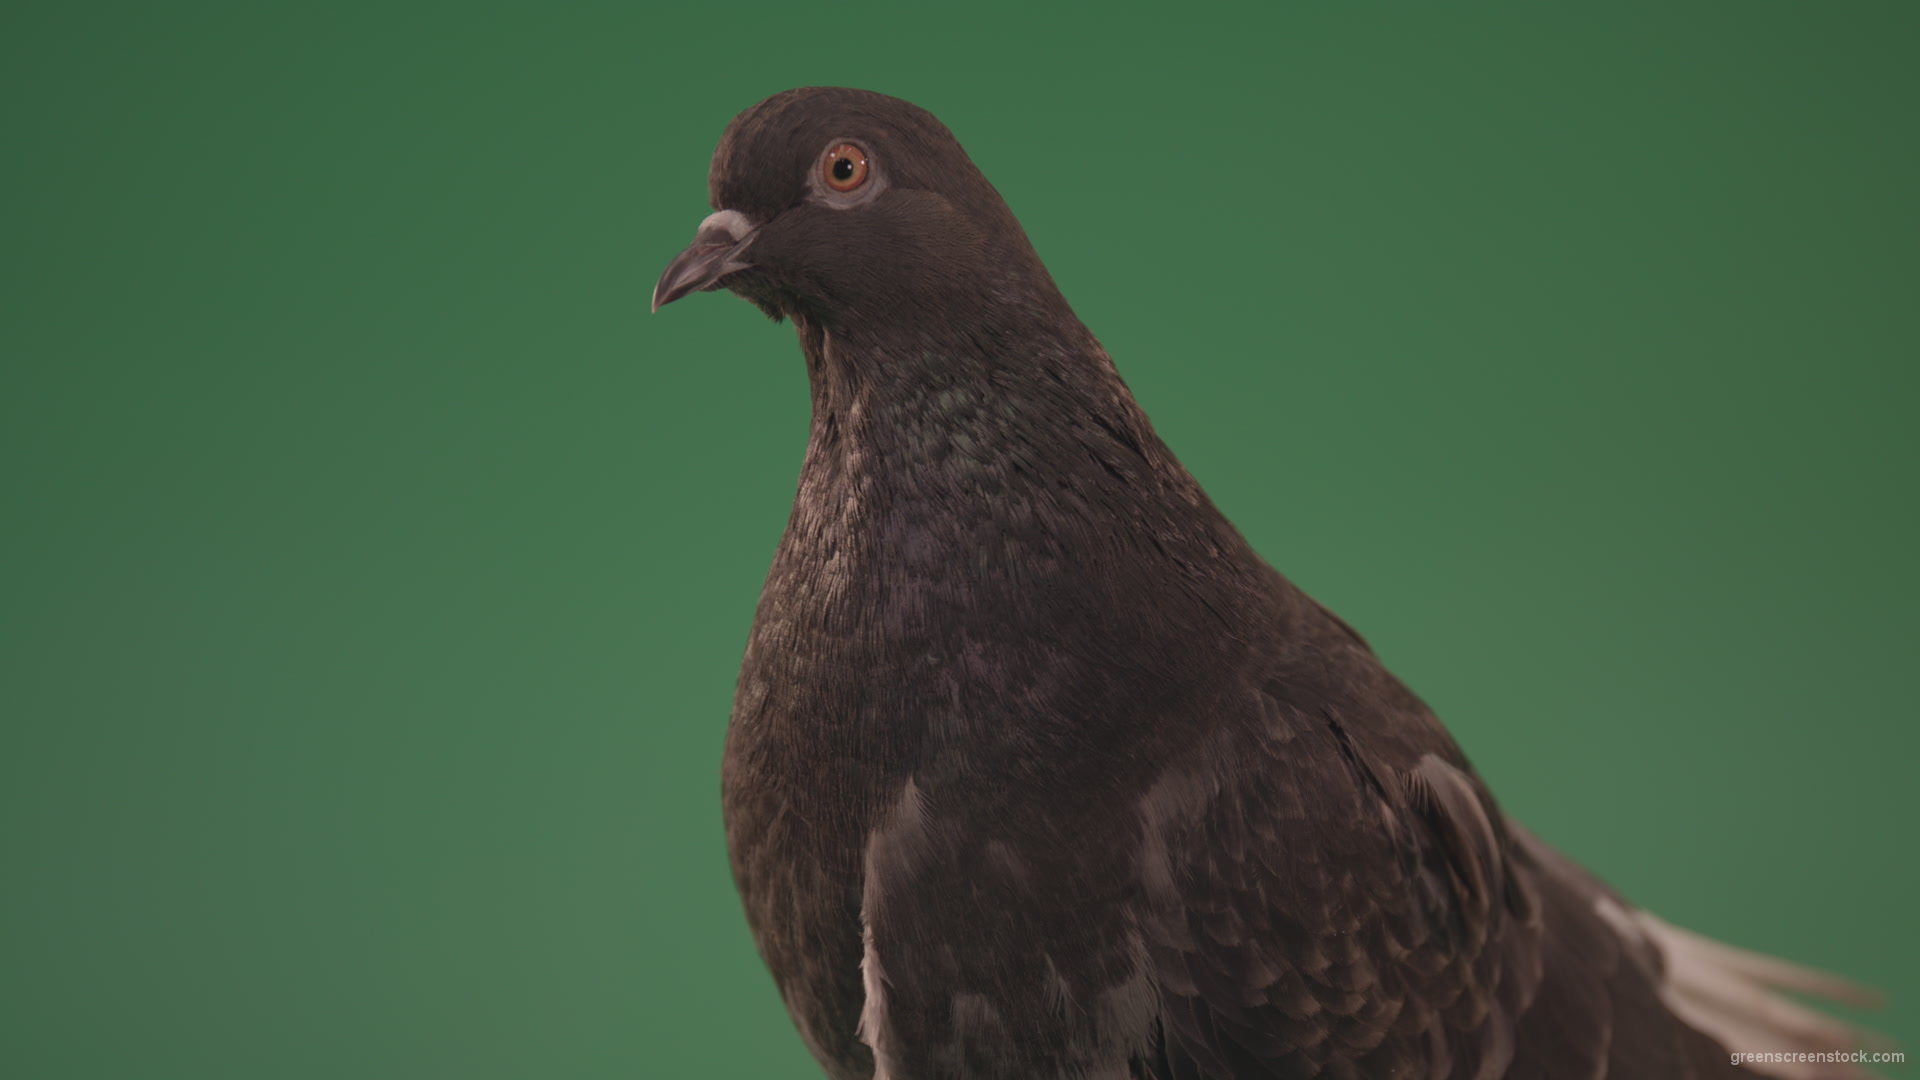 Gray-bird-of-mountain-origin-pigeon-strokes-its-lush-feathers-isolated-in-green-screen-studio_008 Green Screen Stock